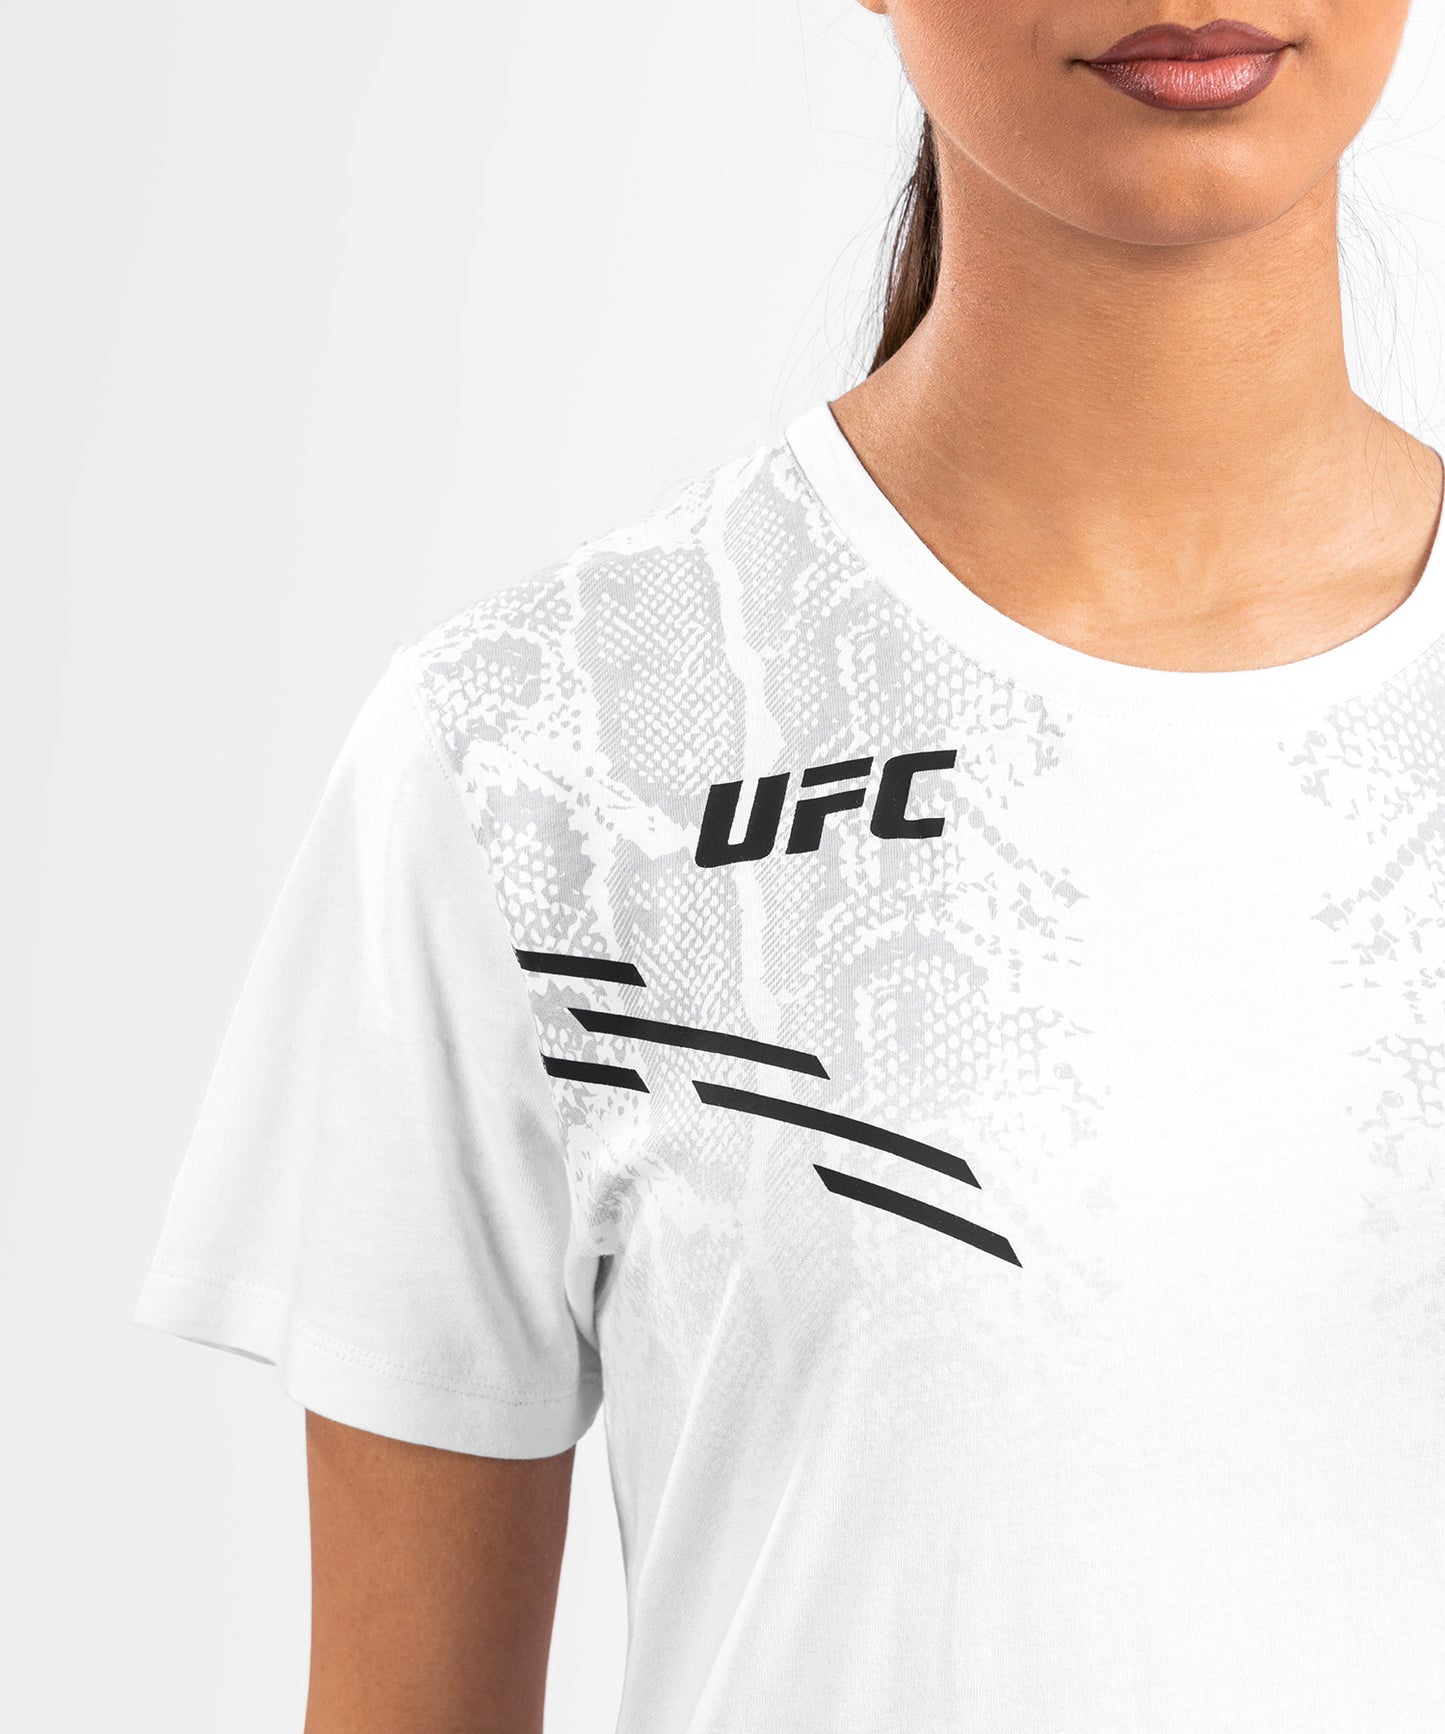 UFC Adrenaline by Venum Replica Camiseta manga corta para Mujer - Blanca